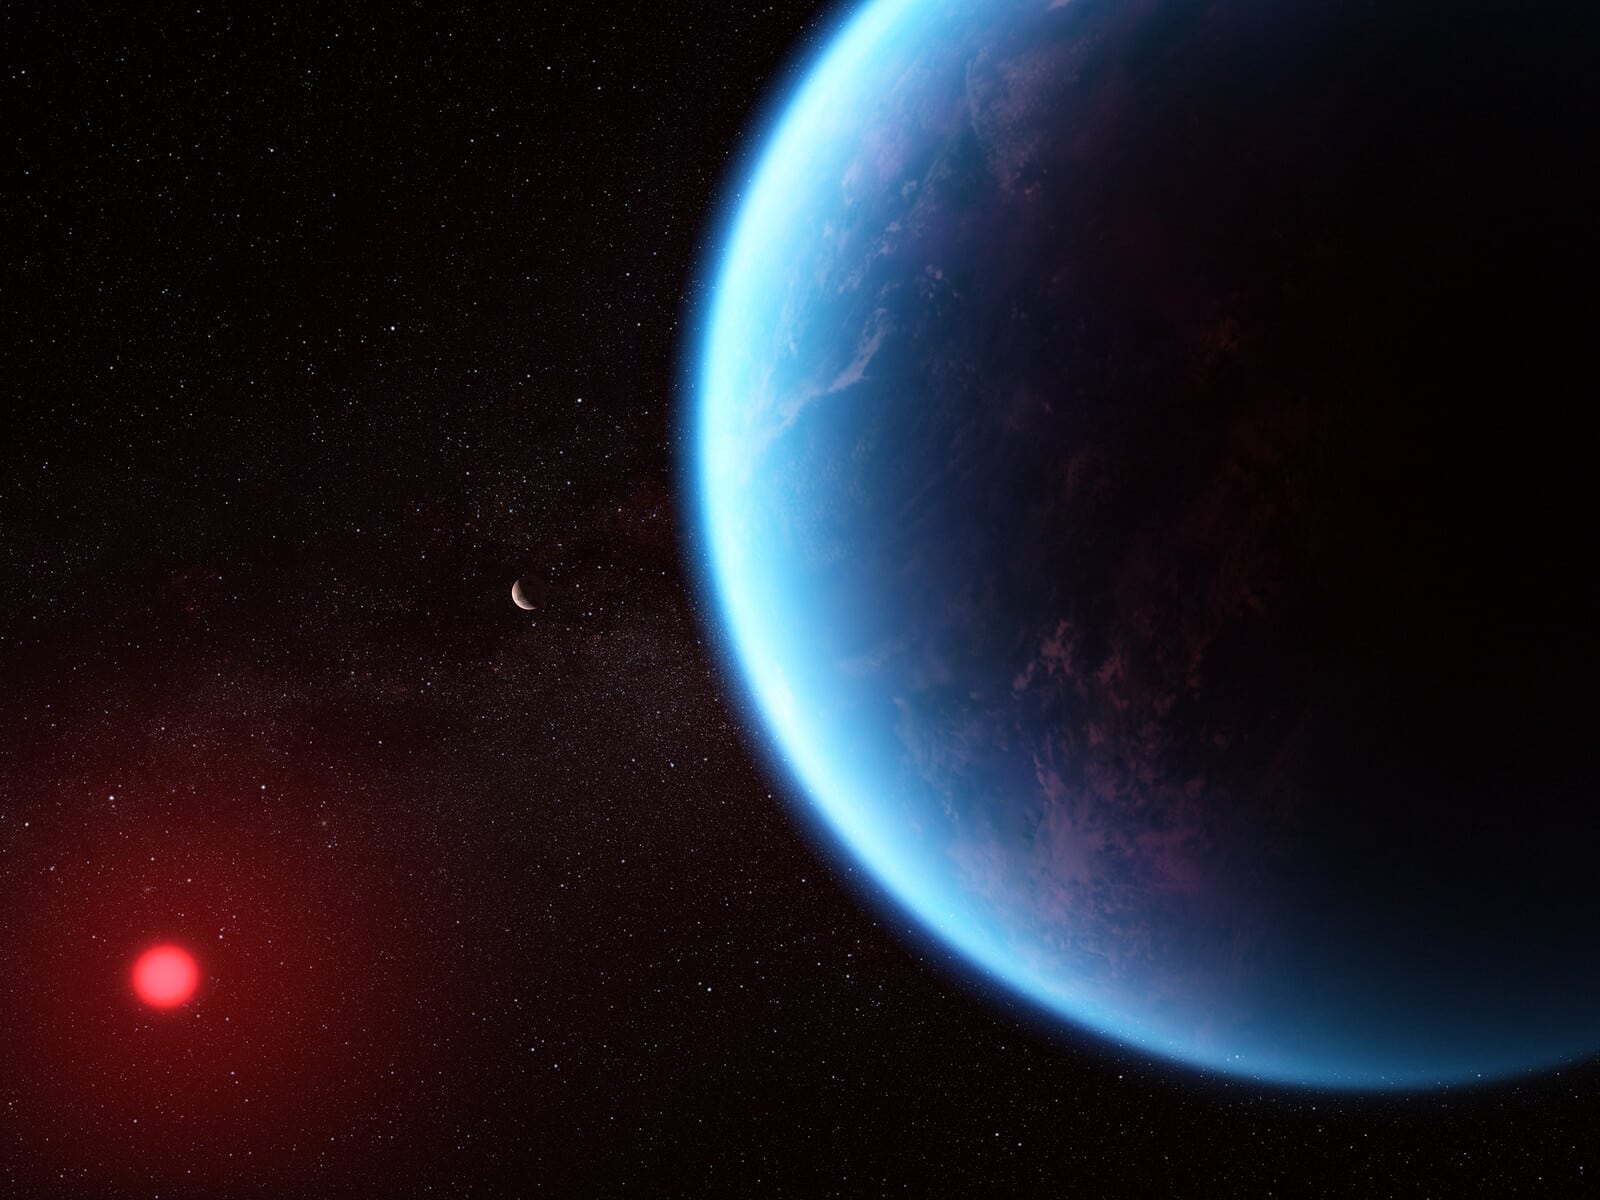 Exoplanet K2-18 b (illustration)